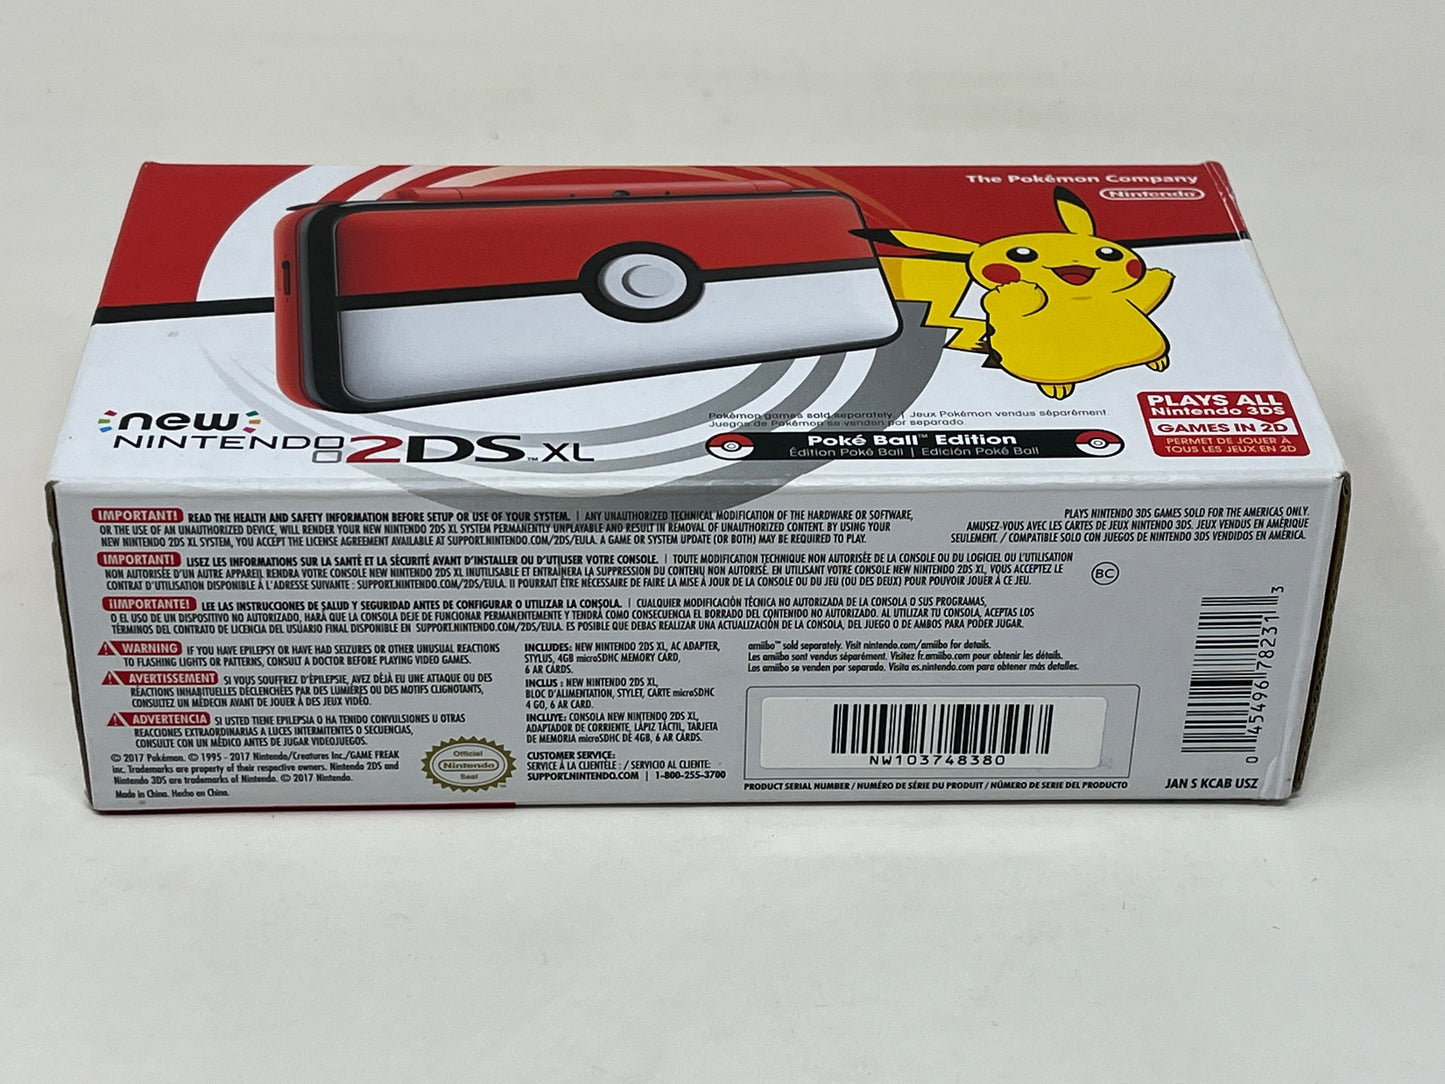 "New" Nintendo 2DS XL Pokemon Poke Ball Edition - Complete in Box